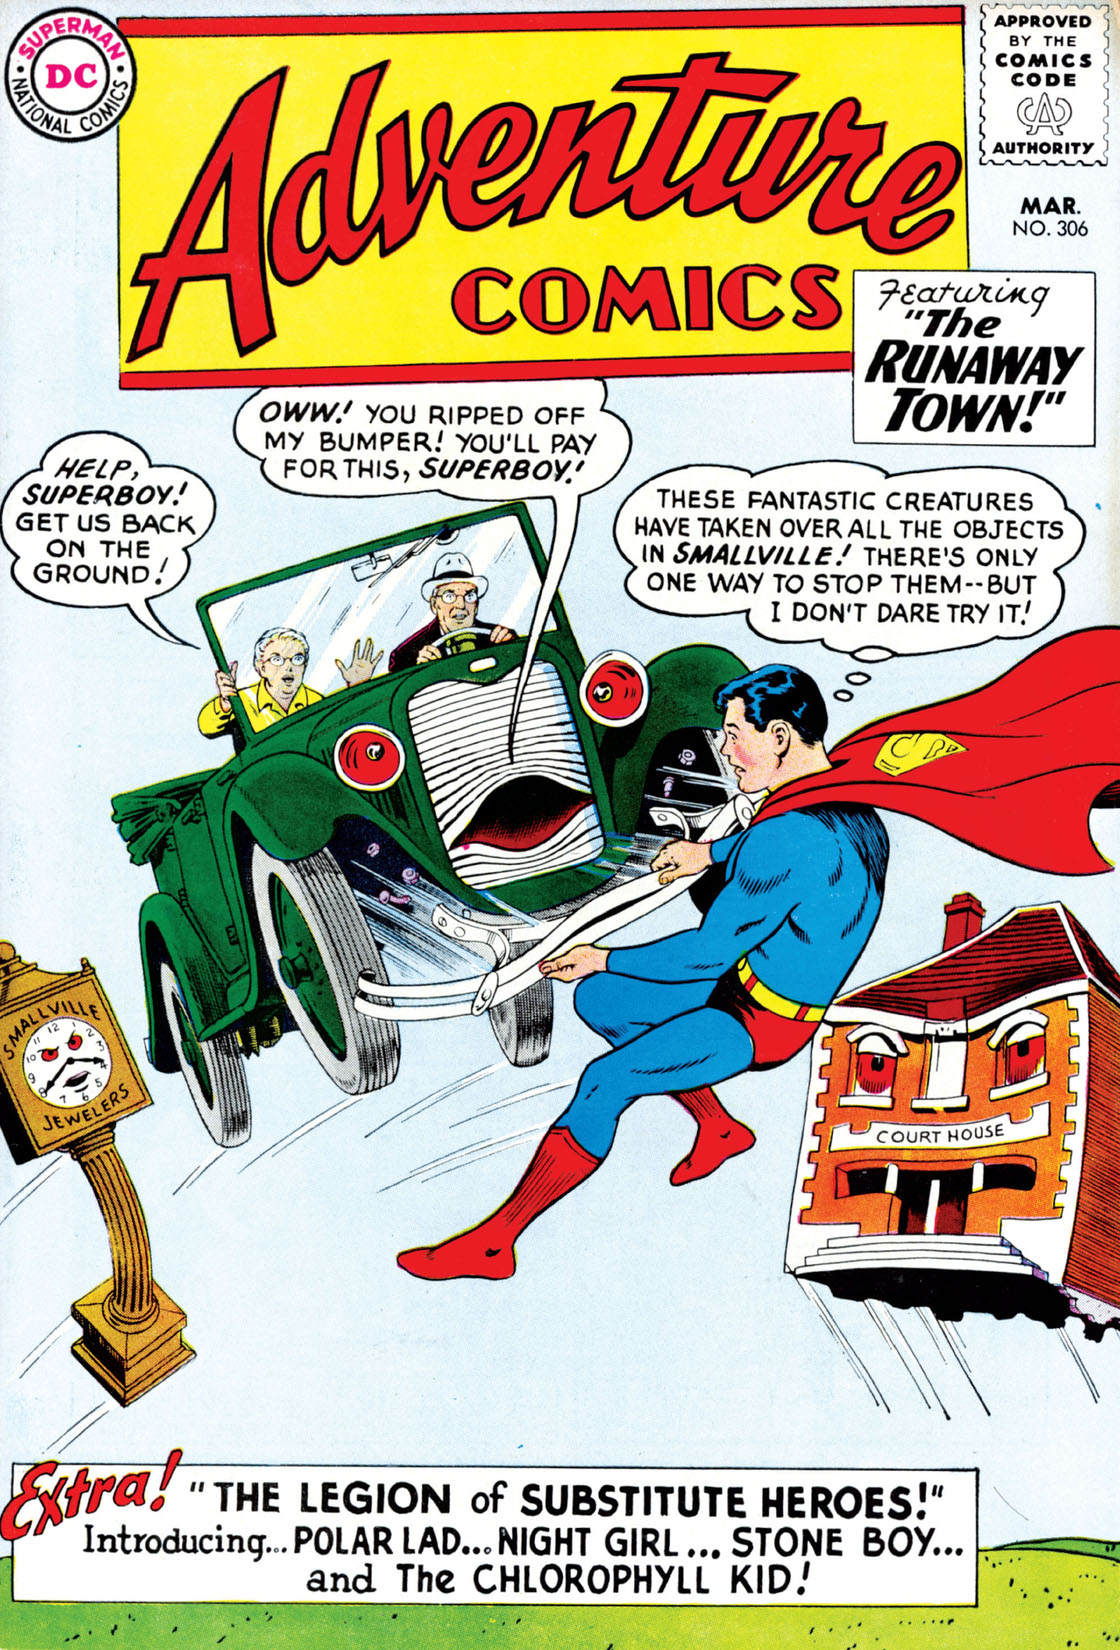 Adventure Comics (1938-) #306 preview images